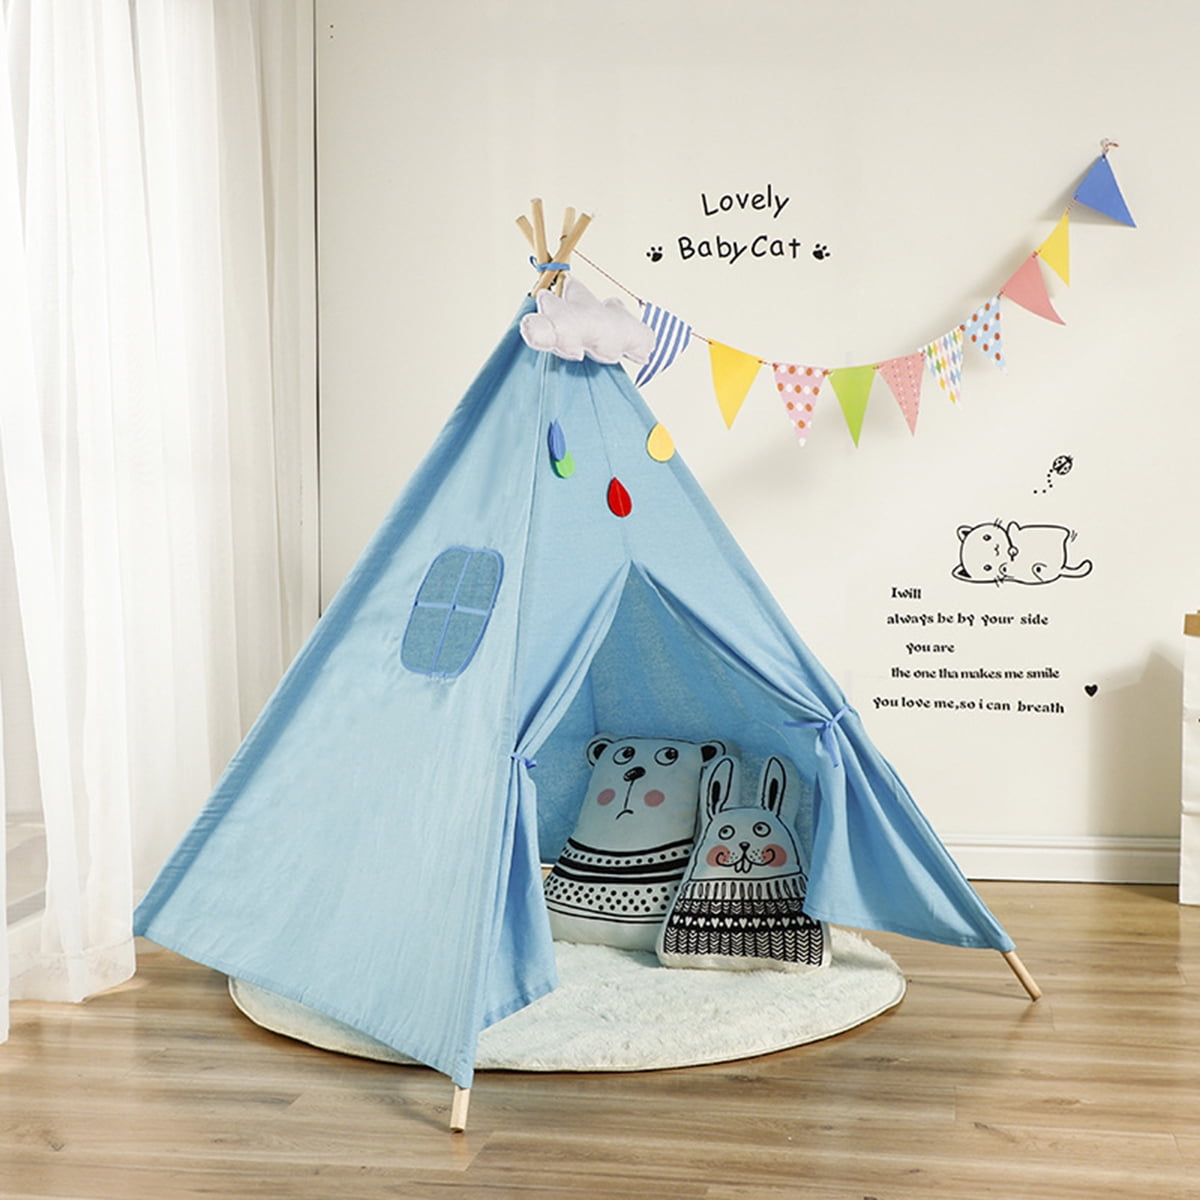 Baby Portable Kids Children Indoor Outdoor Canvas Teepee Wigwam Play Tent Toy 